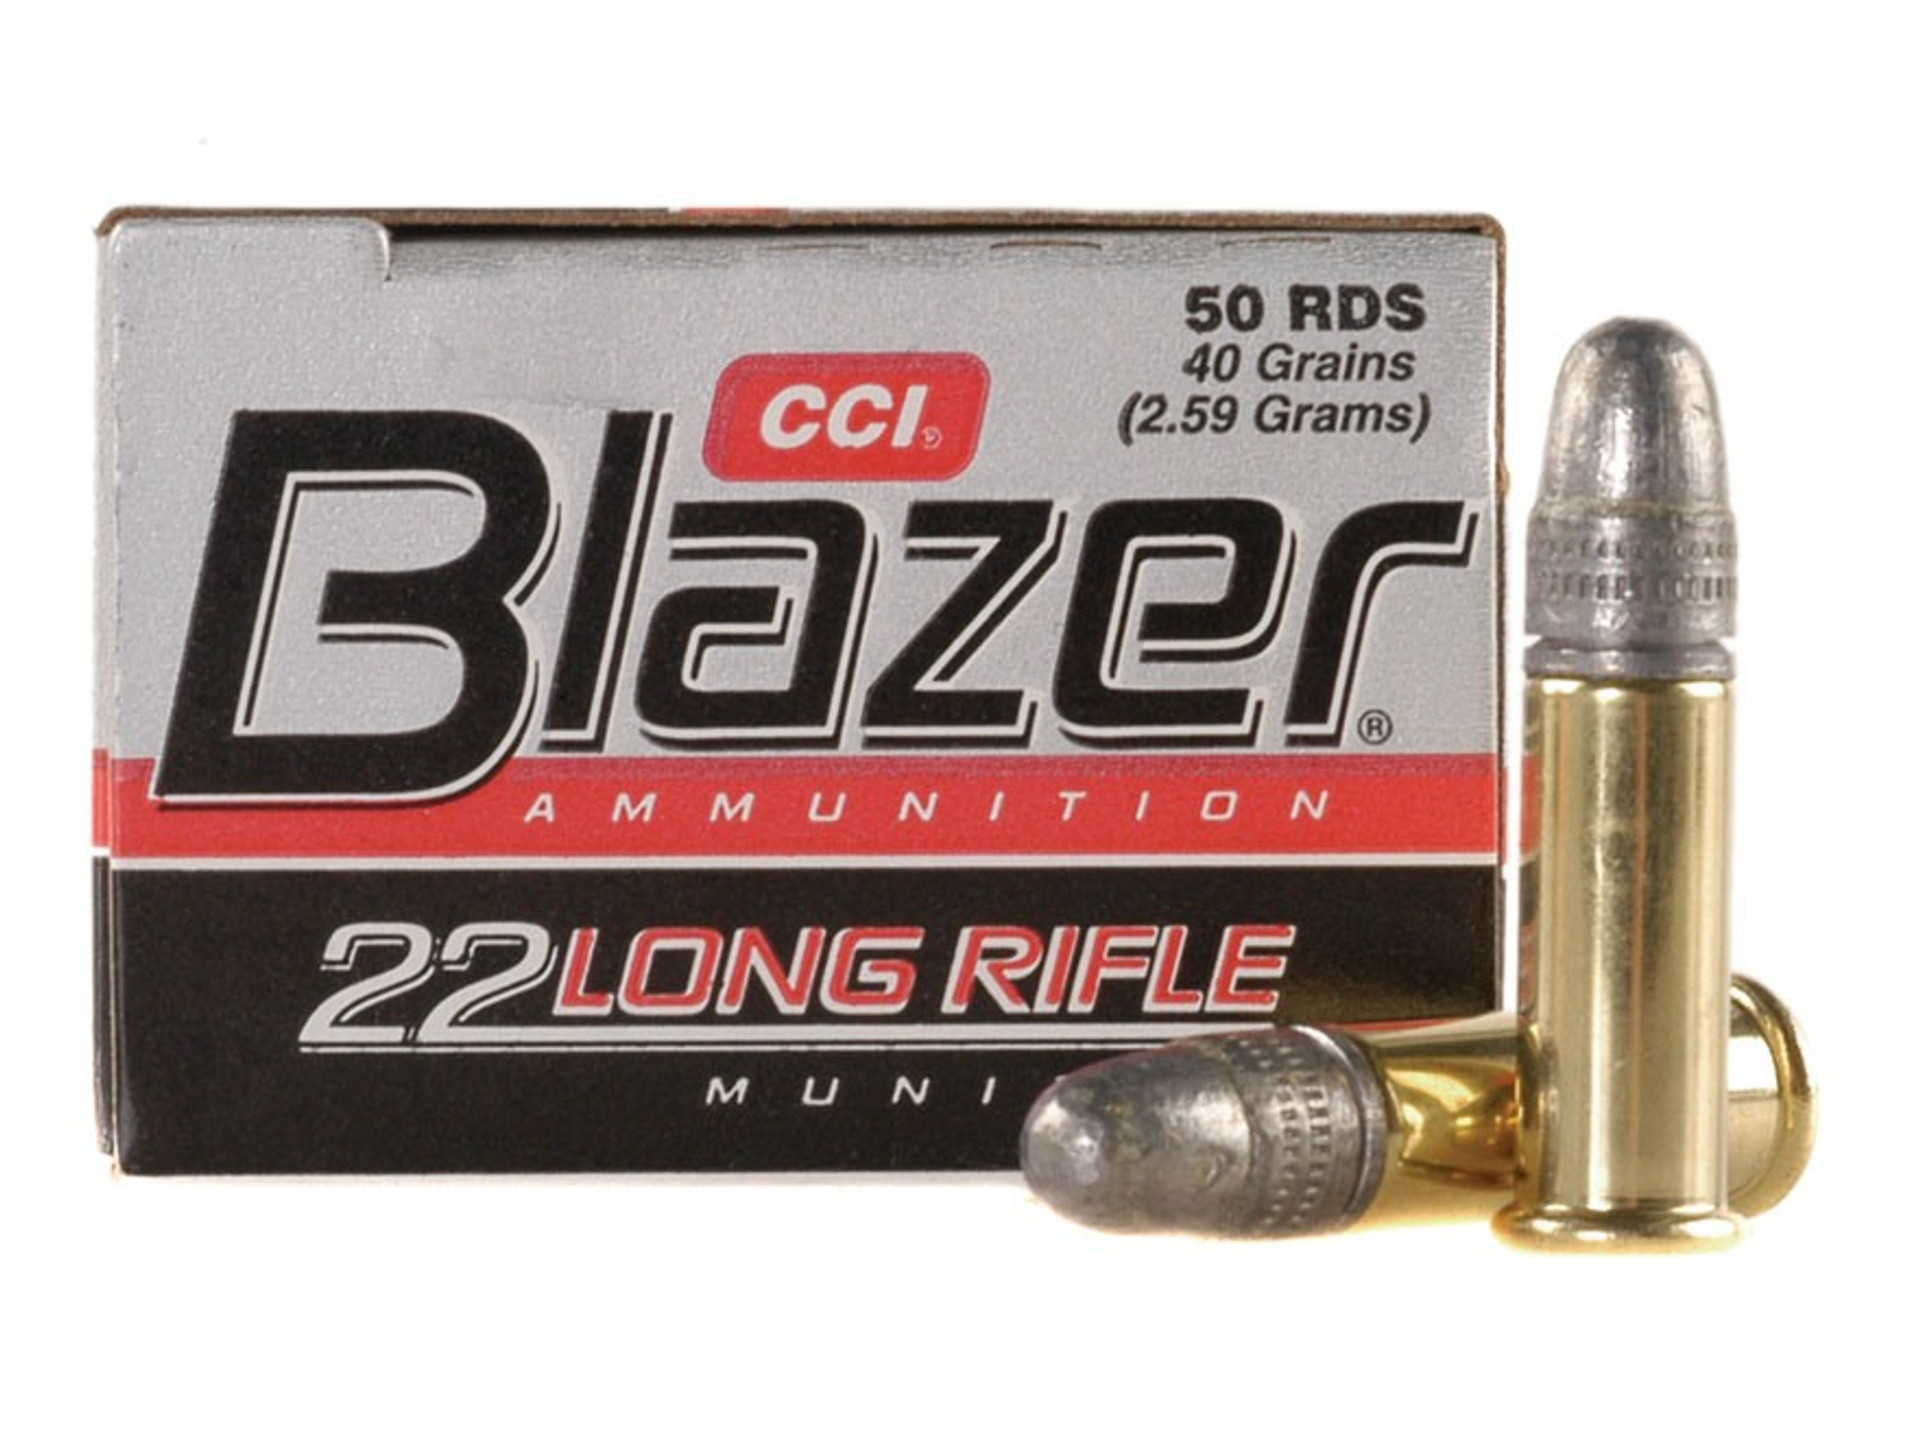 Cci Blazer 22 Lr 40 Grain Lead Round Nose 50 Rounds Box Target Ammo